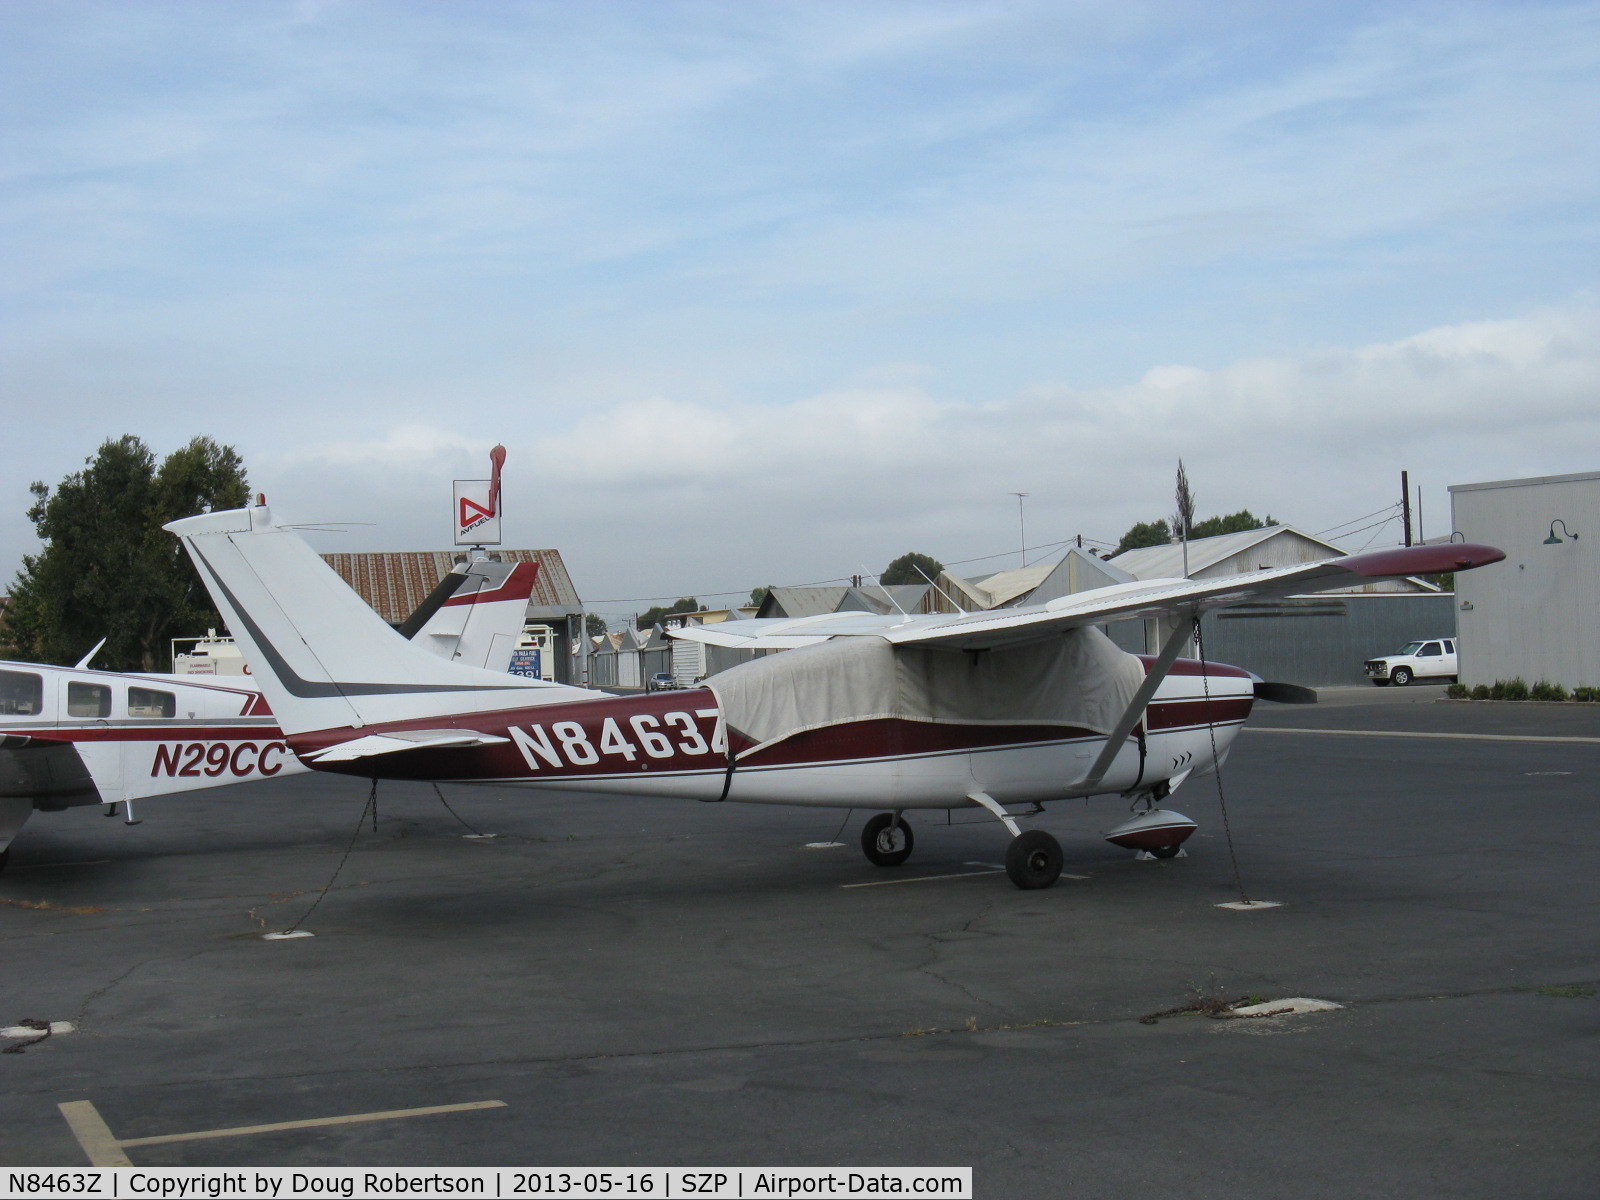 N8463Z, 1963 Cessna 210-5(205) C/N 205-0463, 1963 Cessna 210-5(205) UTILINE (fixed gear version of C210), Continental IO-470-E 260 Hp